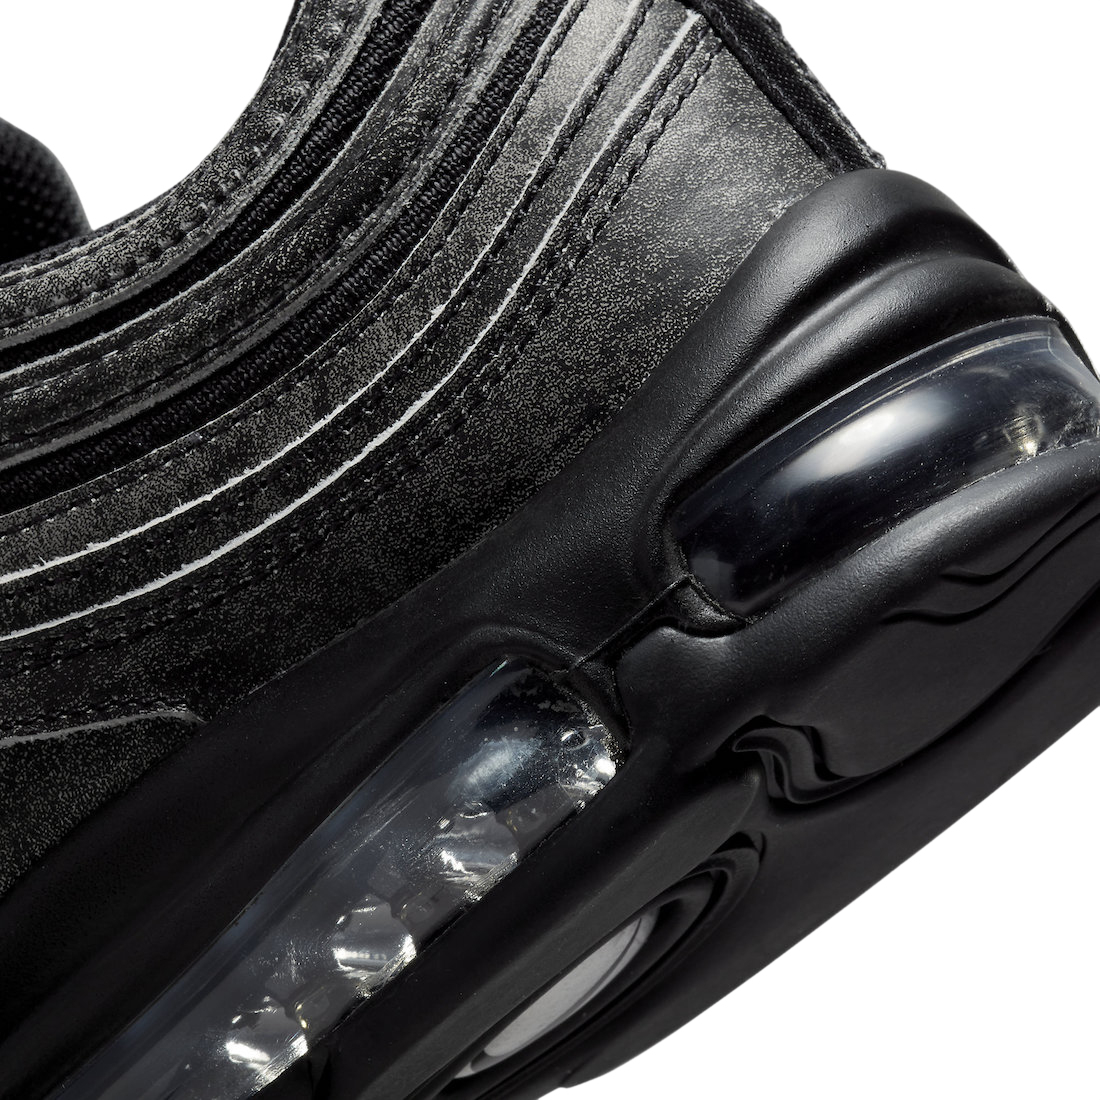 Comme des Garçons x Nike Air Max 97 Black Grey DX6932-002